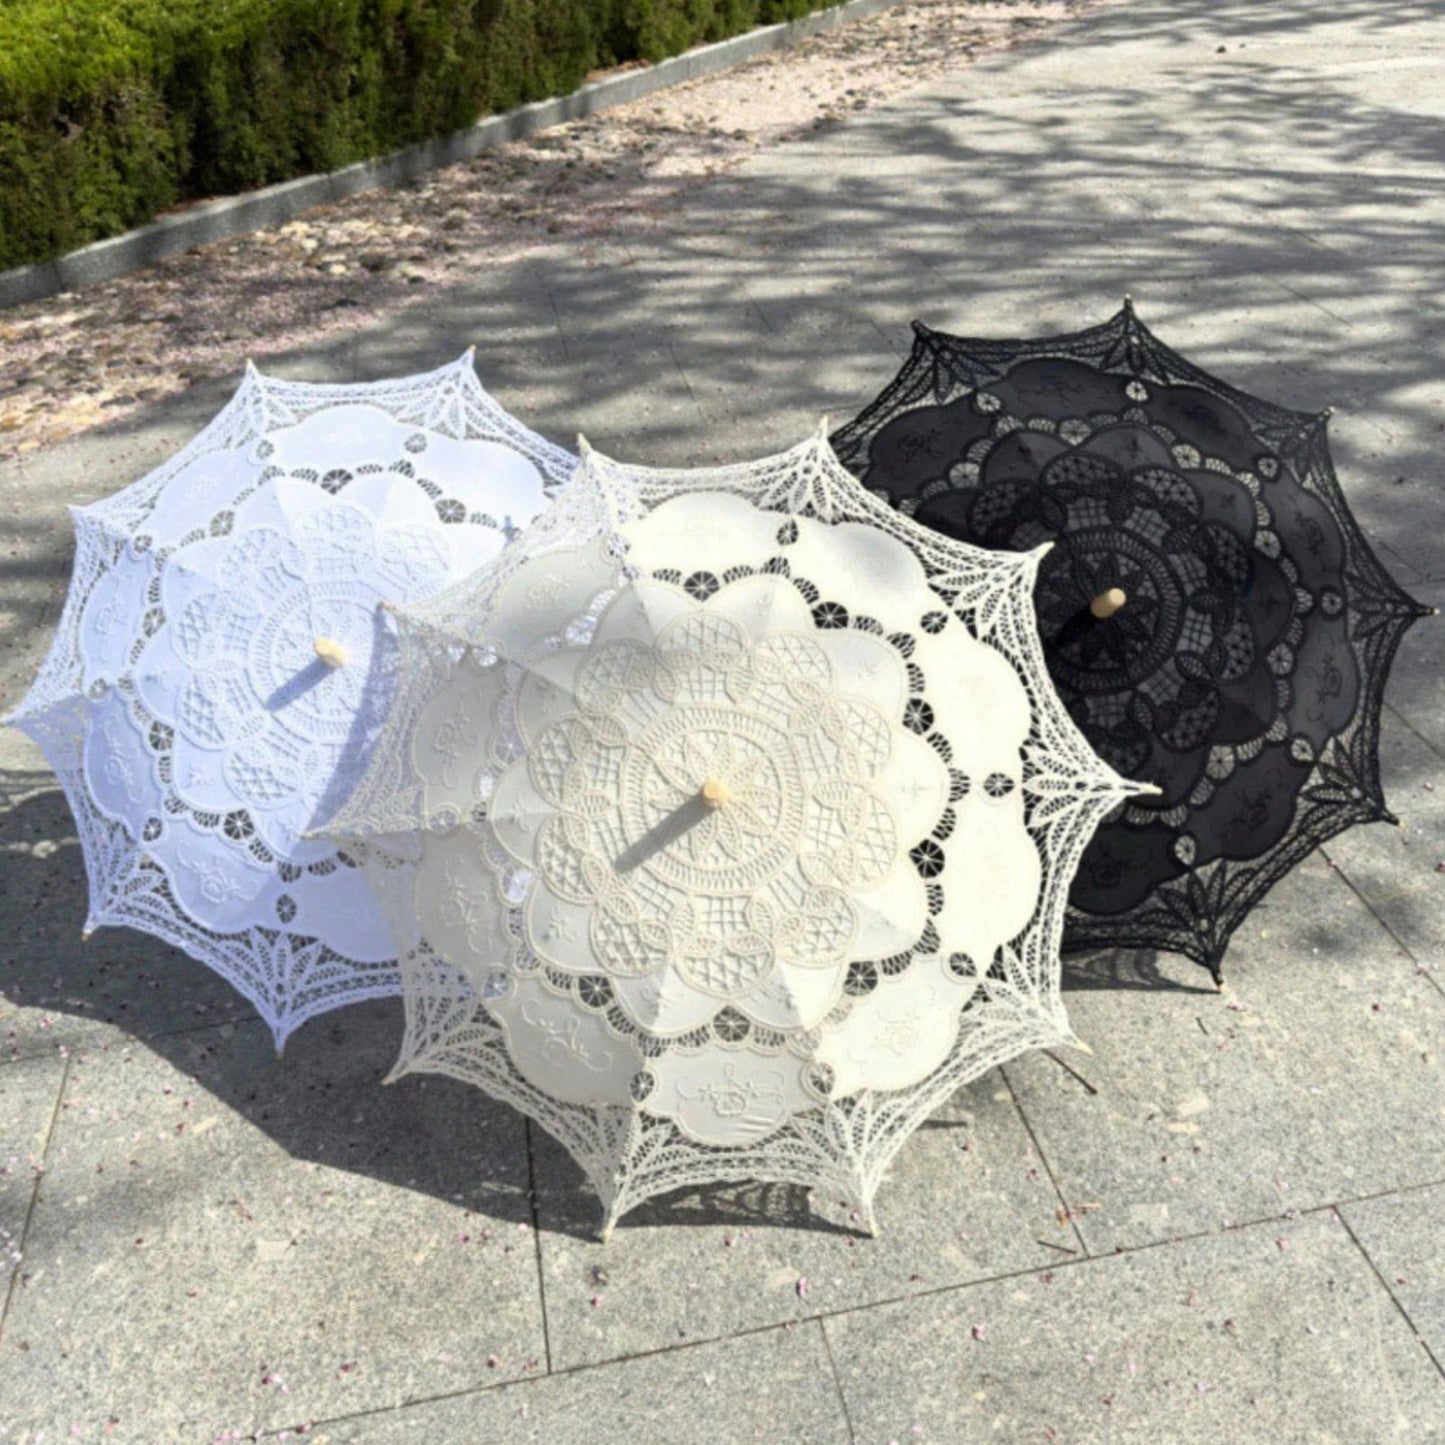 Lace Umbrella-multiple colors